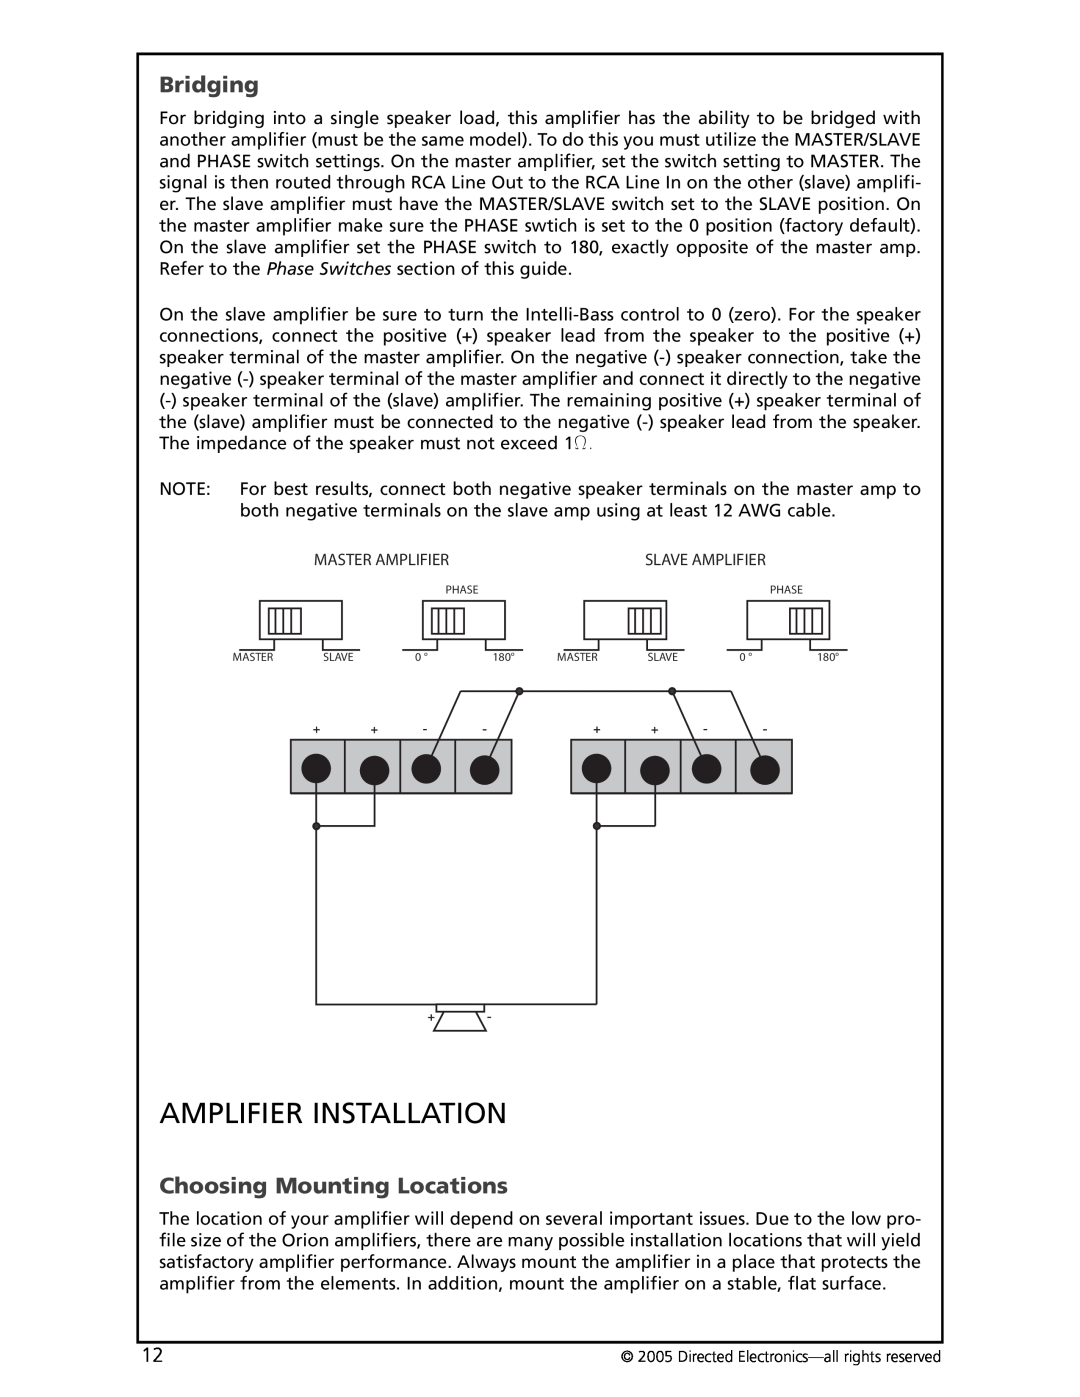 Orion Car Audio HCCA-D600 manual Amplifier Installation, Bridging, Choosing Mounting Locations 